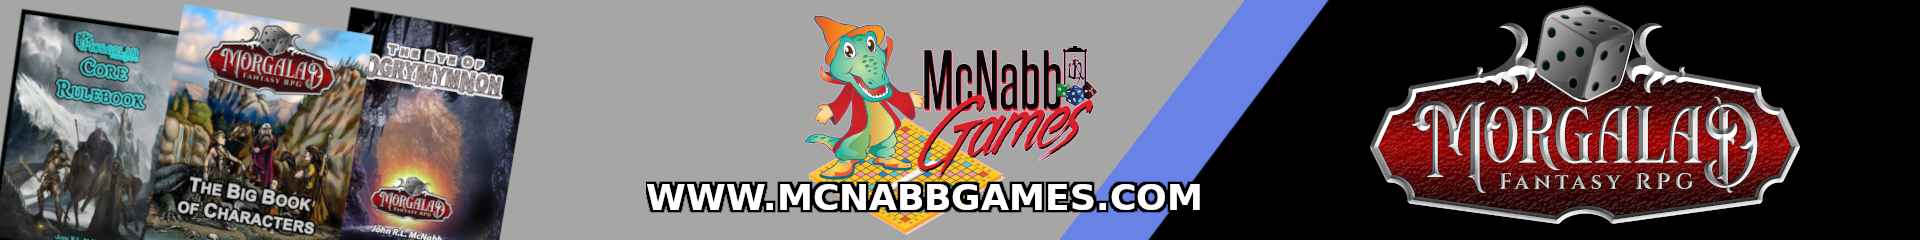 McNabb Games Banner